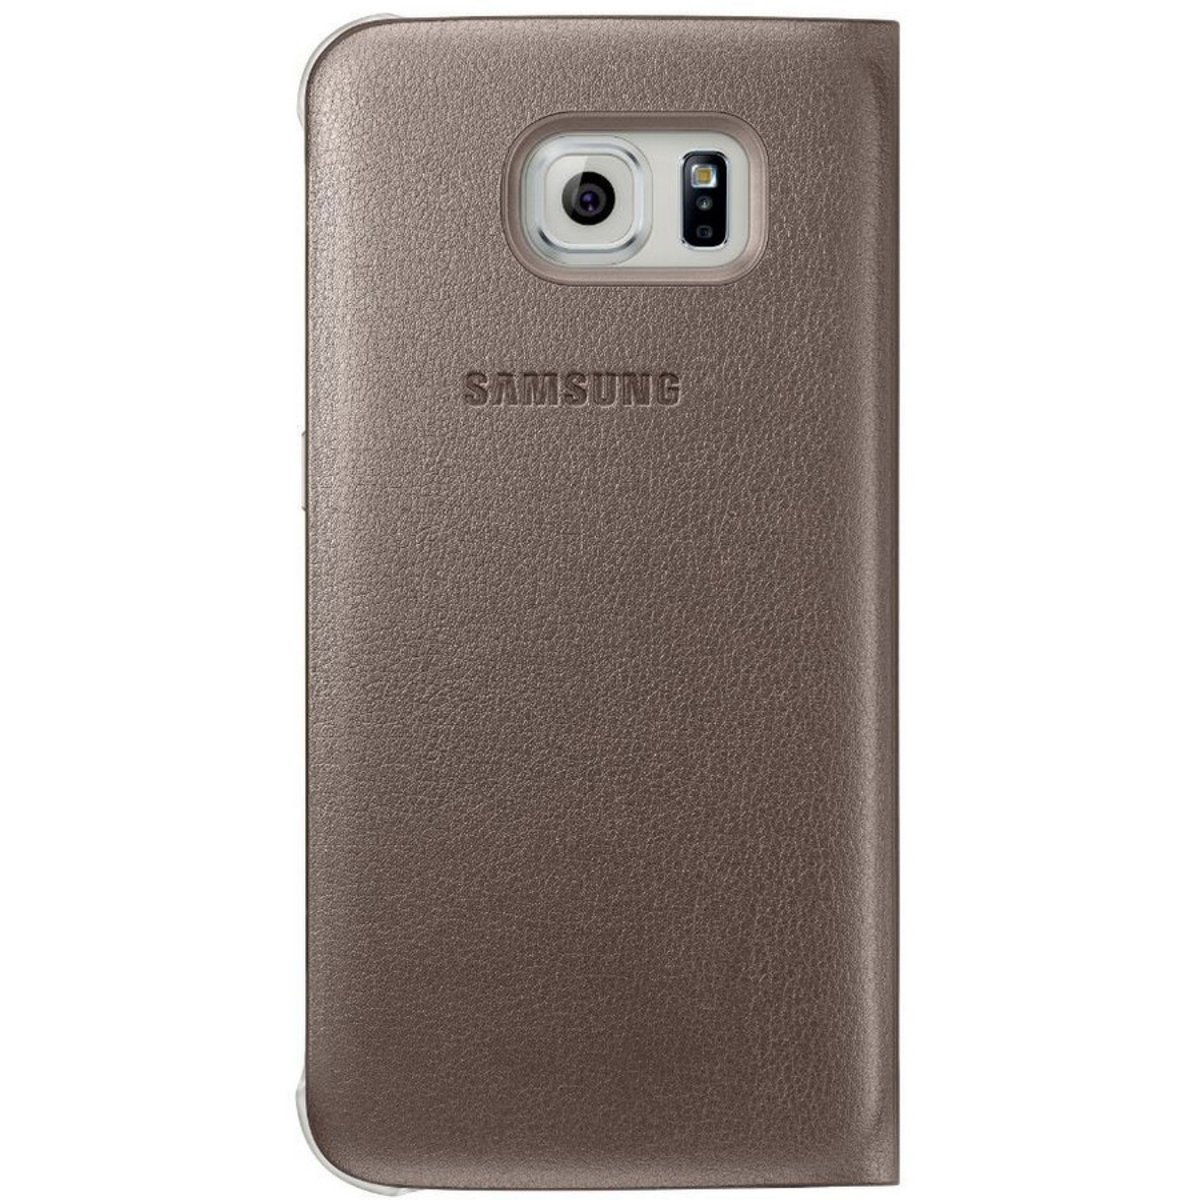 Samsung Galaxy S6 S-View Case Gold